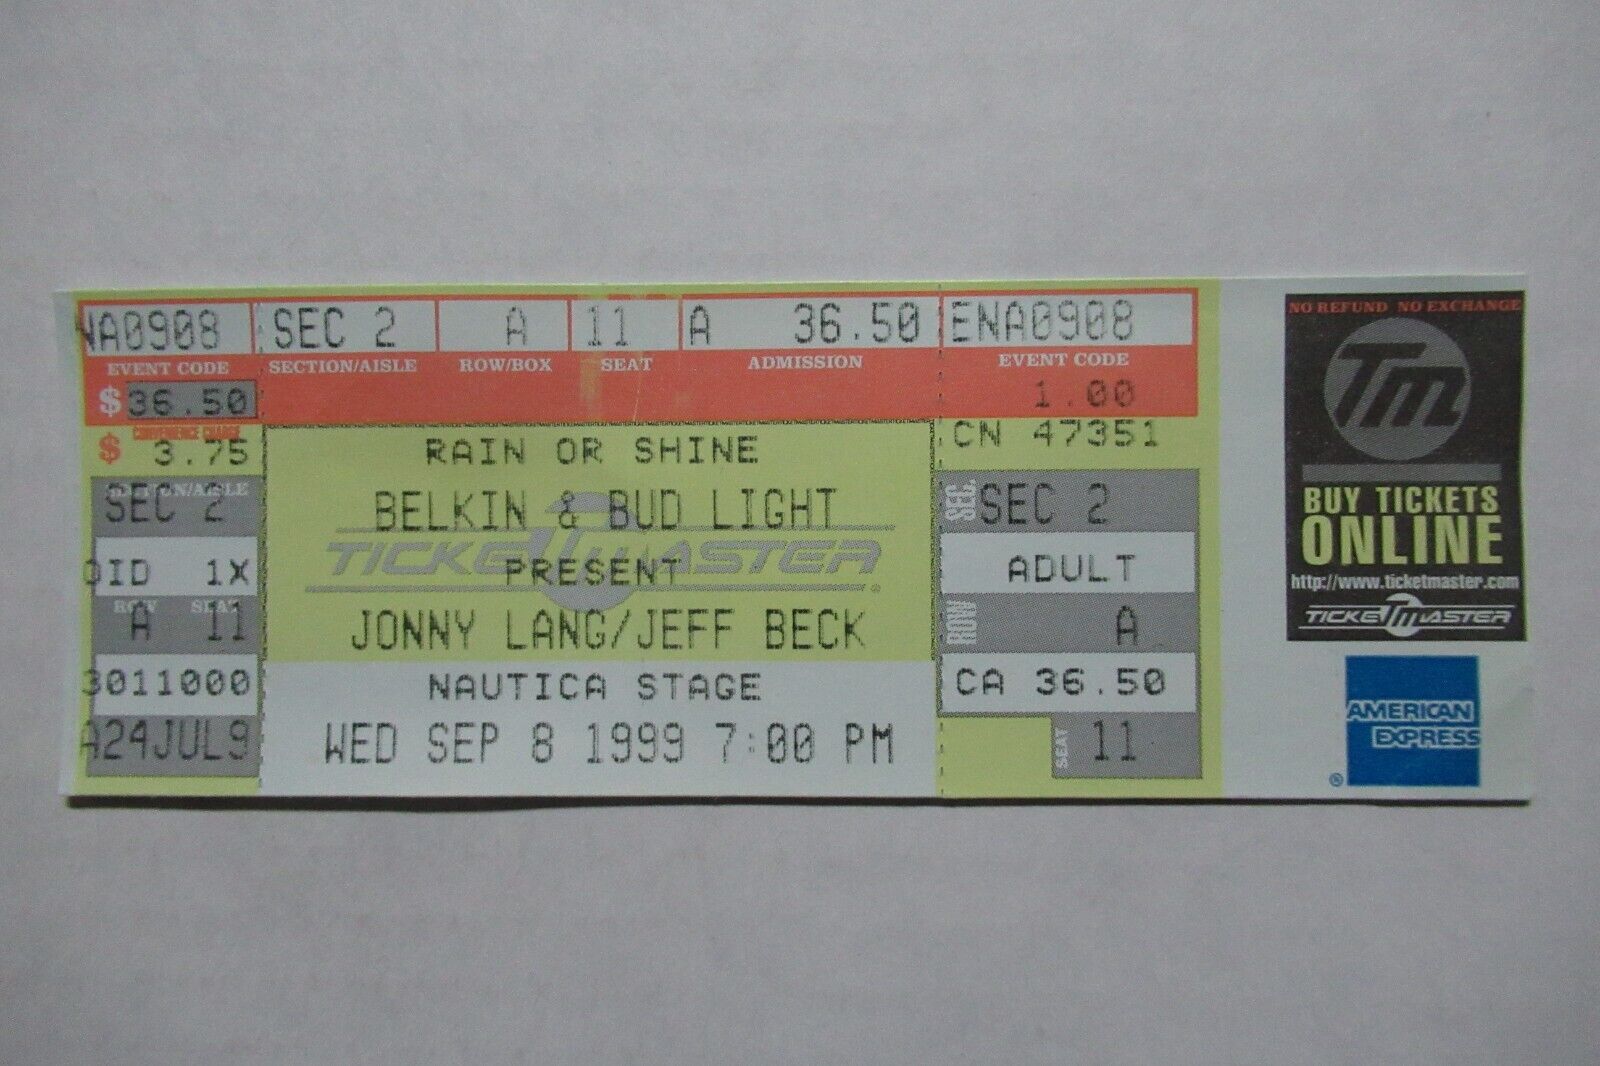 JONNY LANG/JEFF BECK CONCERT TOUR 9/8/1999 FULL TICKET NAUTICA STAGE CLEVELAND